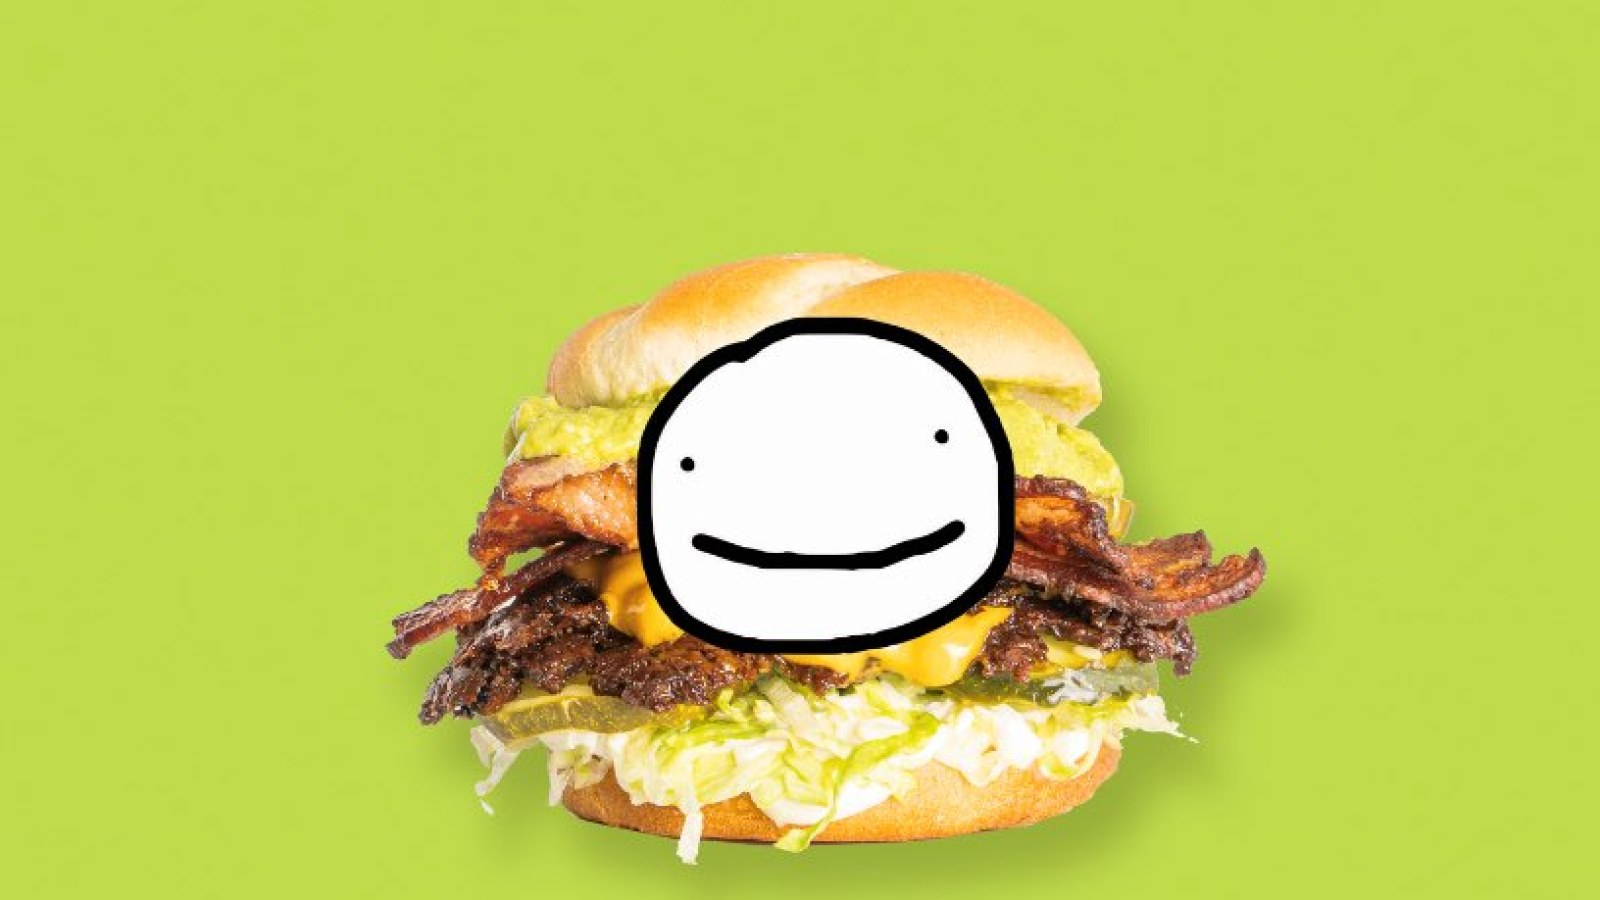 American Dream  MrBeast Burger